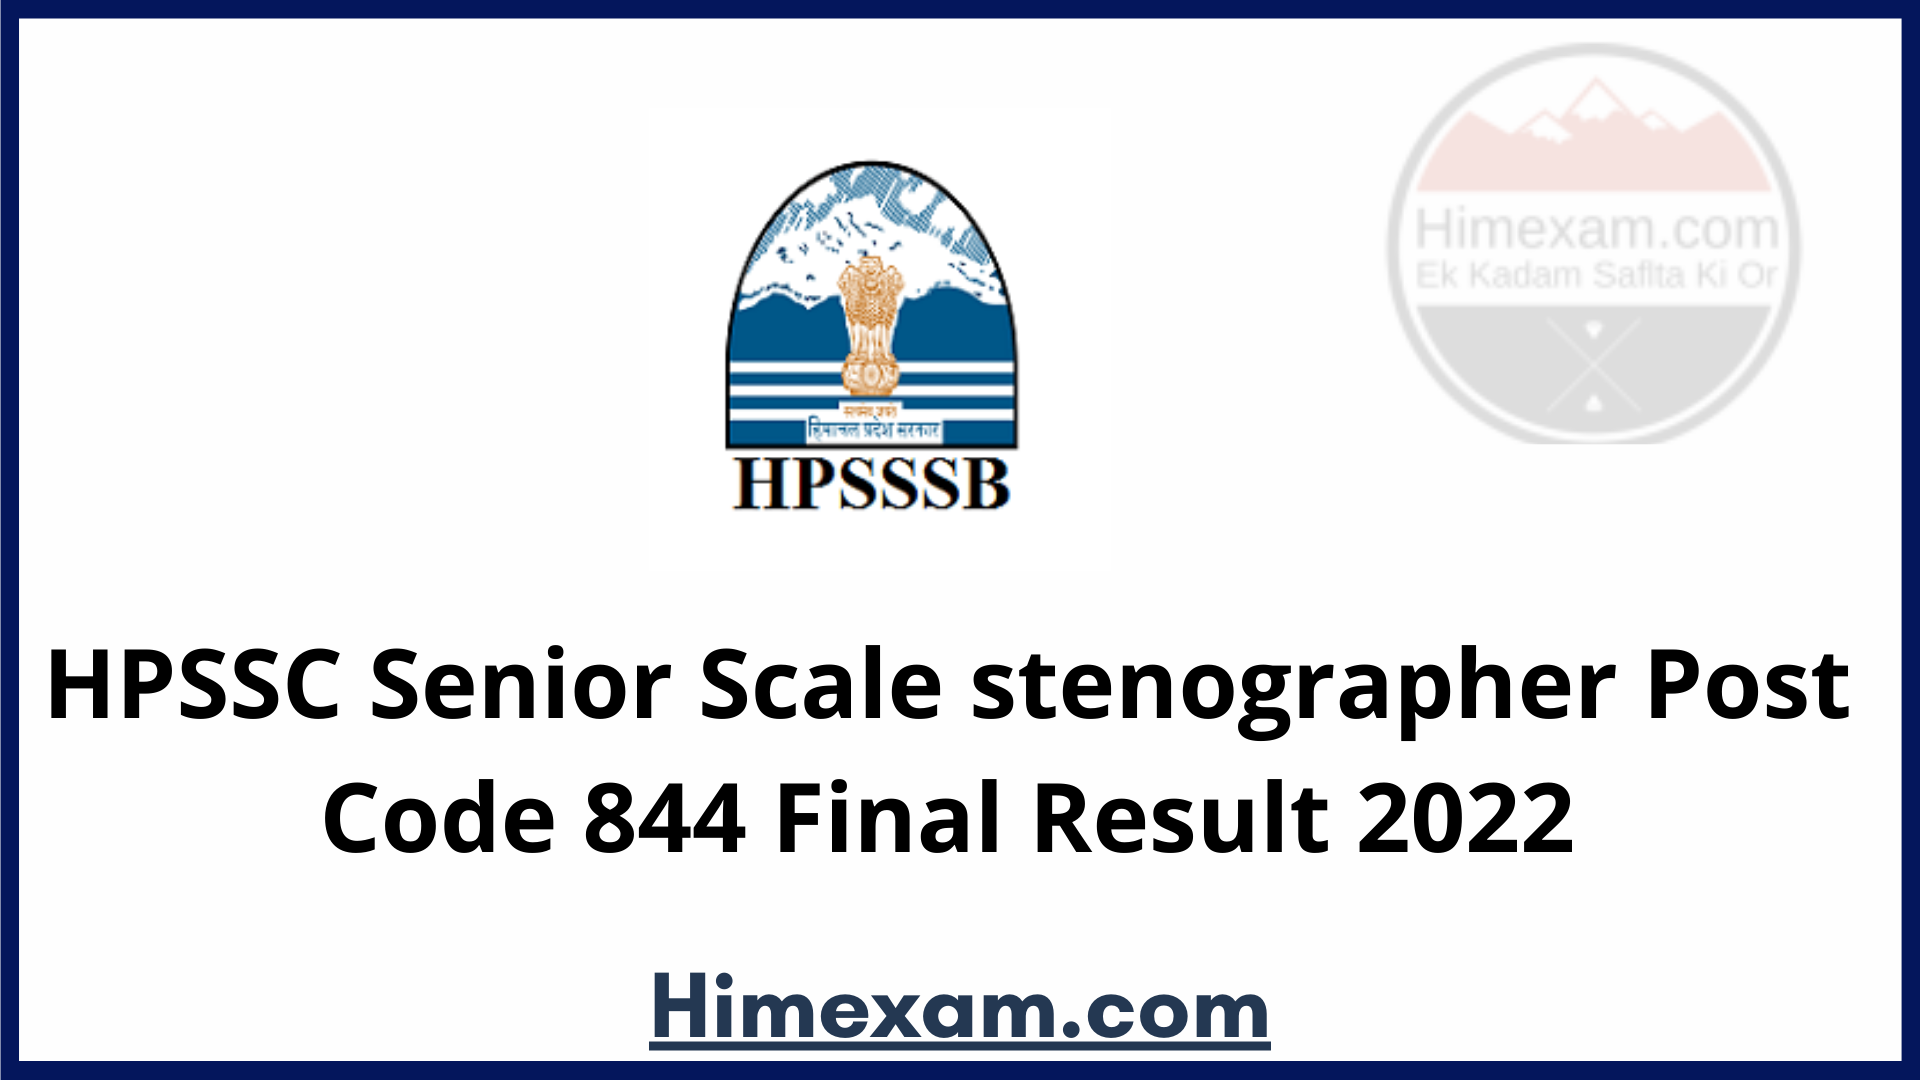 HPSSC Senior Scale stenographer Post Code 844 Final Result 2022